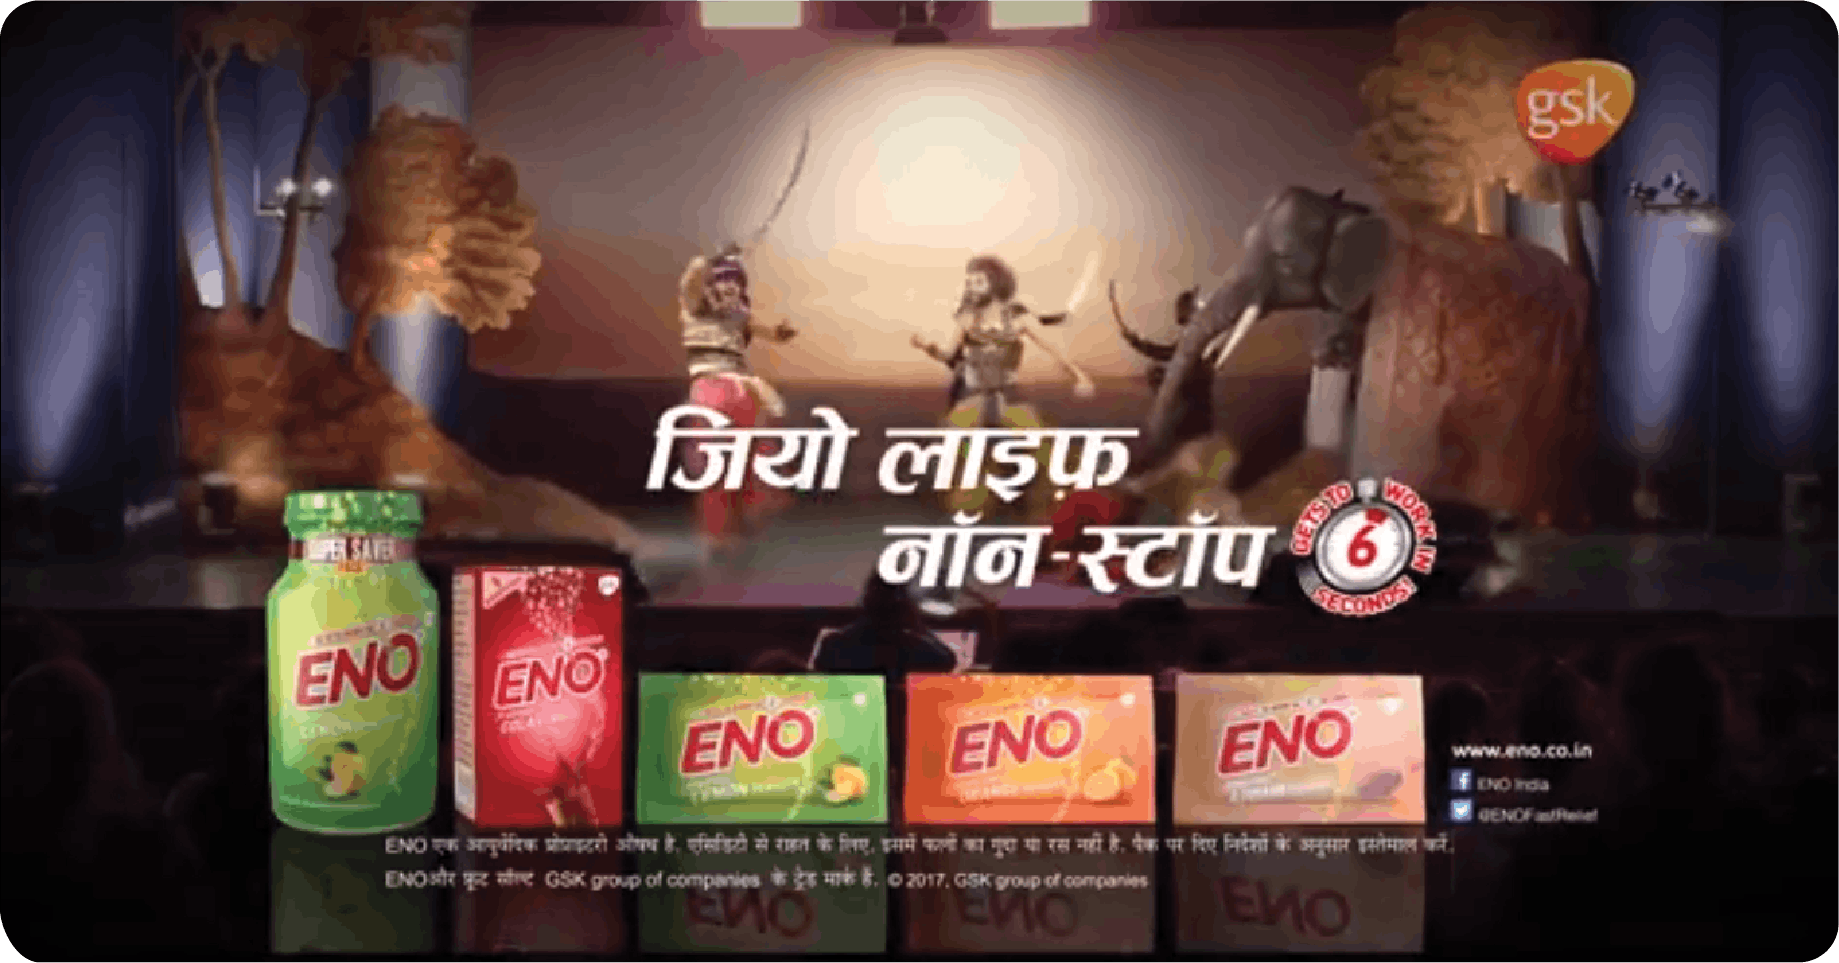 Eno 'Jiyo Life Non Stop' campaign with Eno product variants